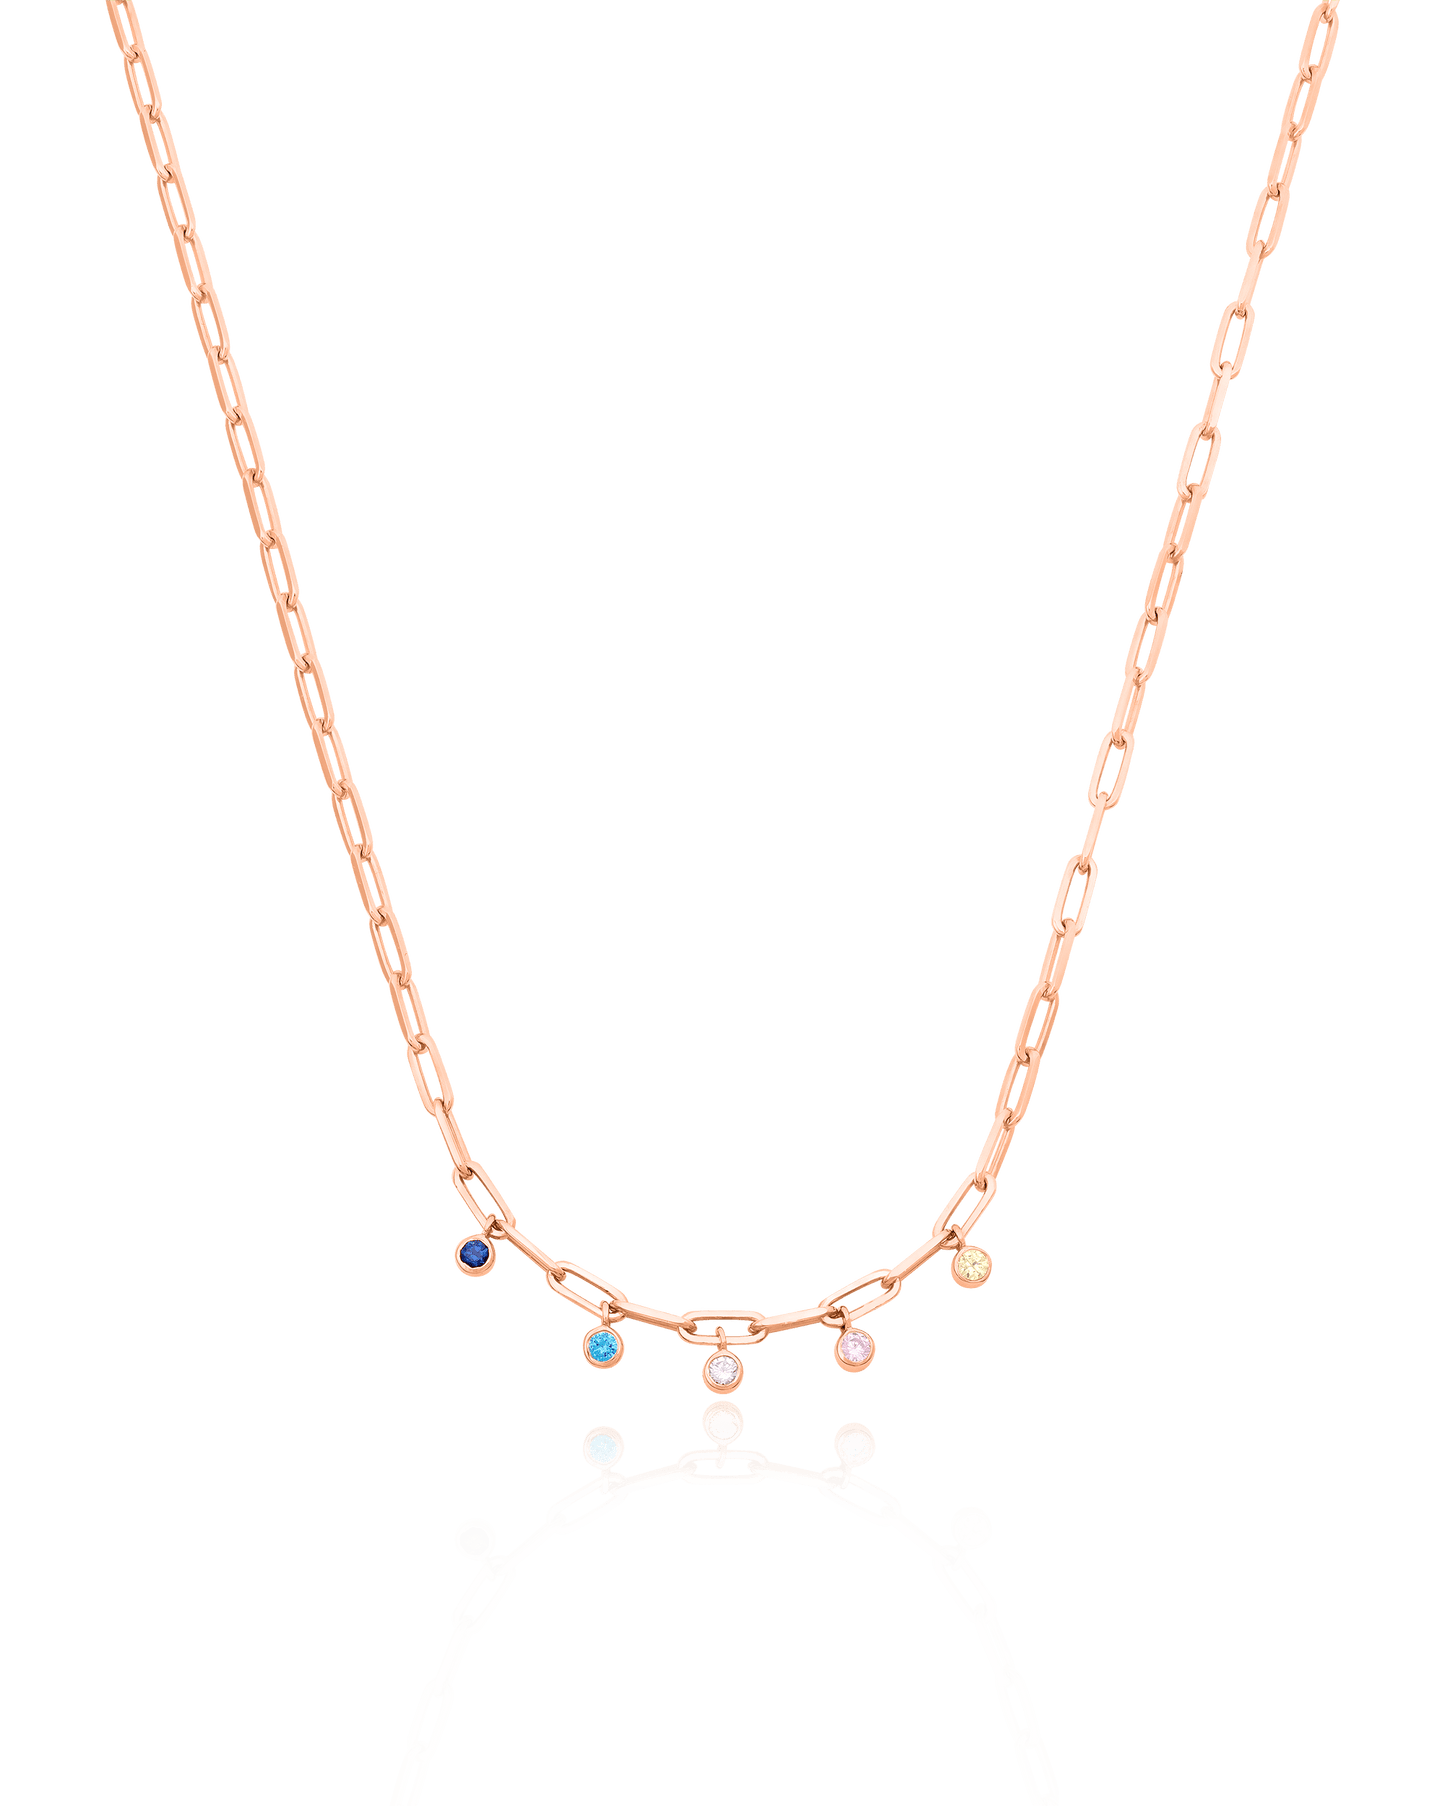 Bermuda Birthstone Necklace - 925 Sterling Silver Necklaces magal-dev 